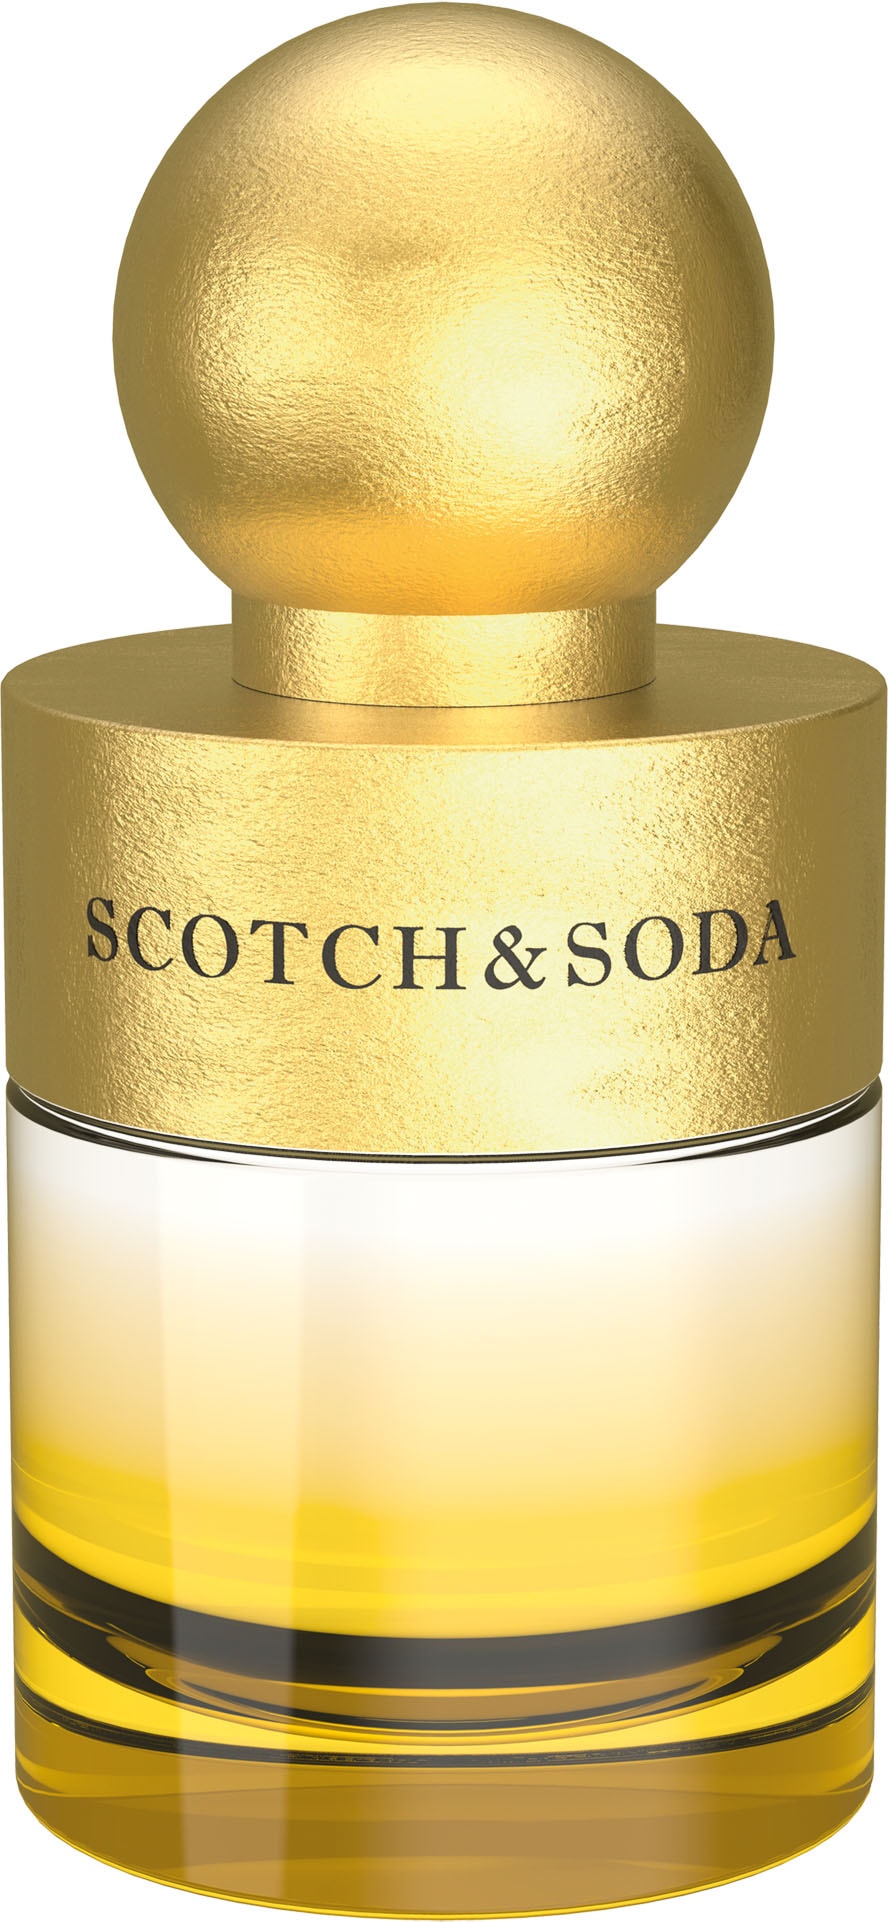 Parfum Women« Eau Water & | Soda BAUR online »Island Scotch bestellen de